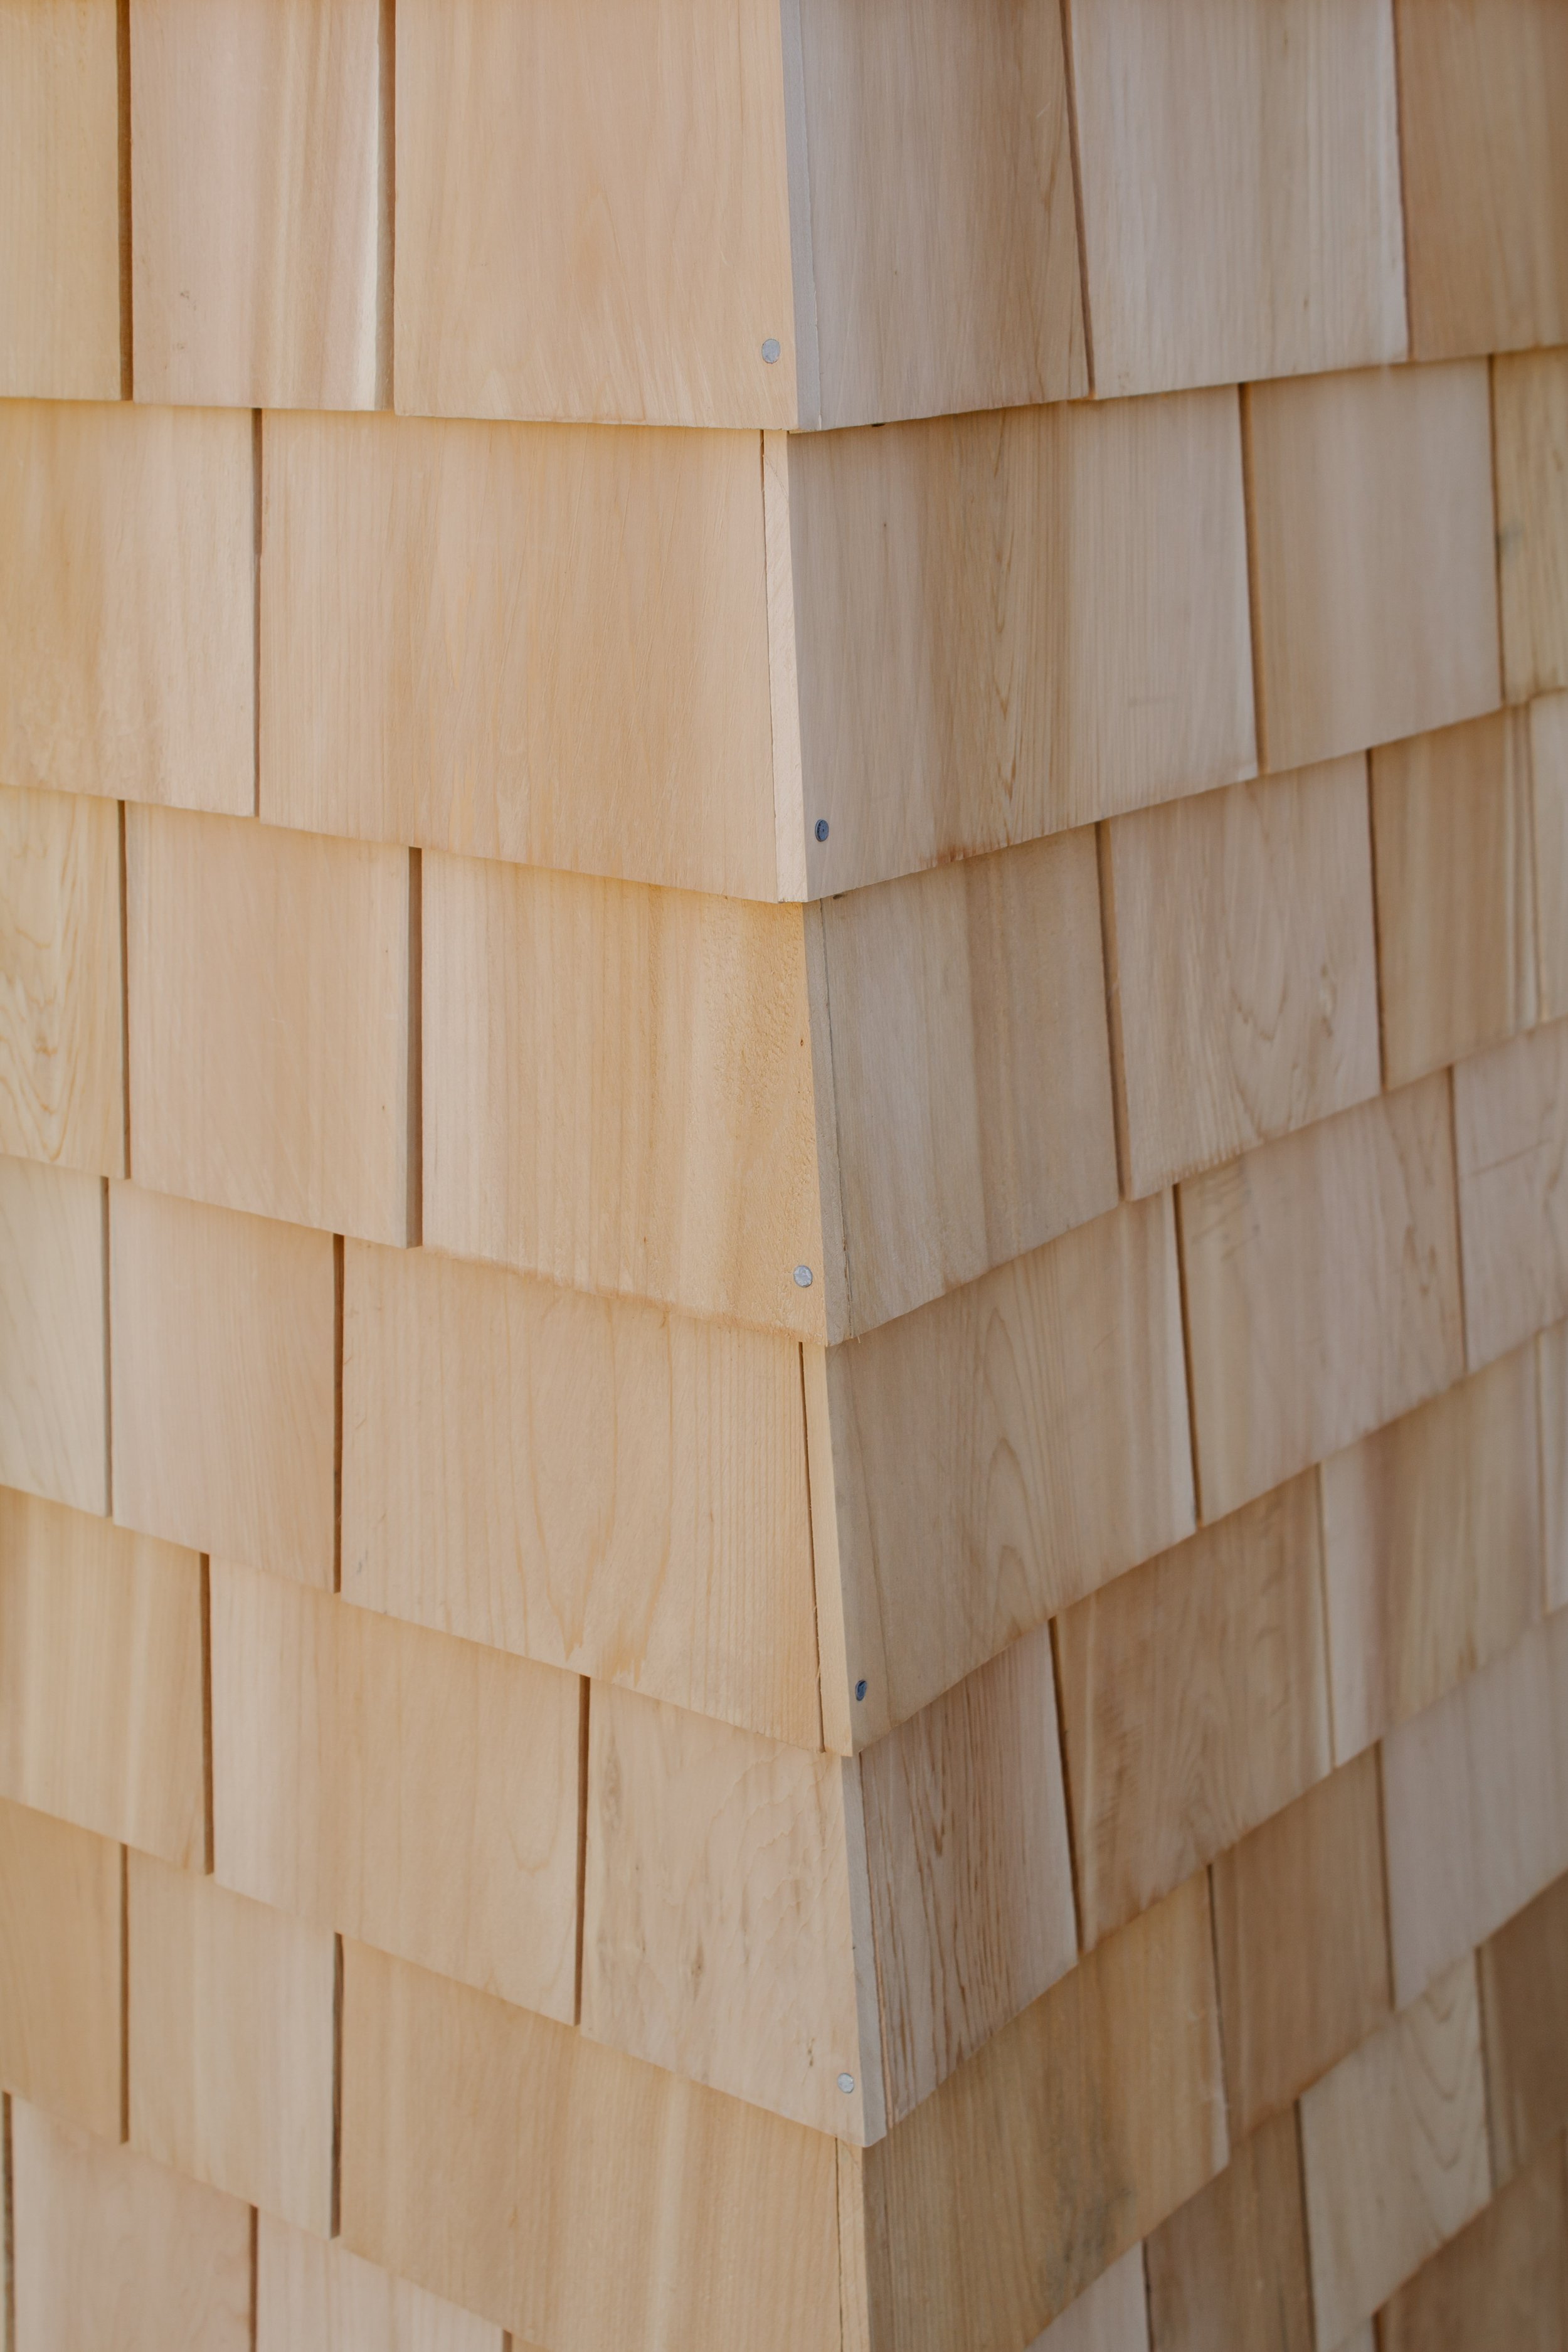 Cedar shingle install progress report. How to install cedar shingles for siding. Where to buy cedar shakes & shingles. Exterior siding project how to. Natural kiln dried cedar siding. | Nadine Stay